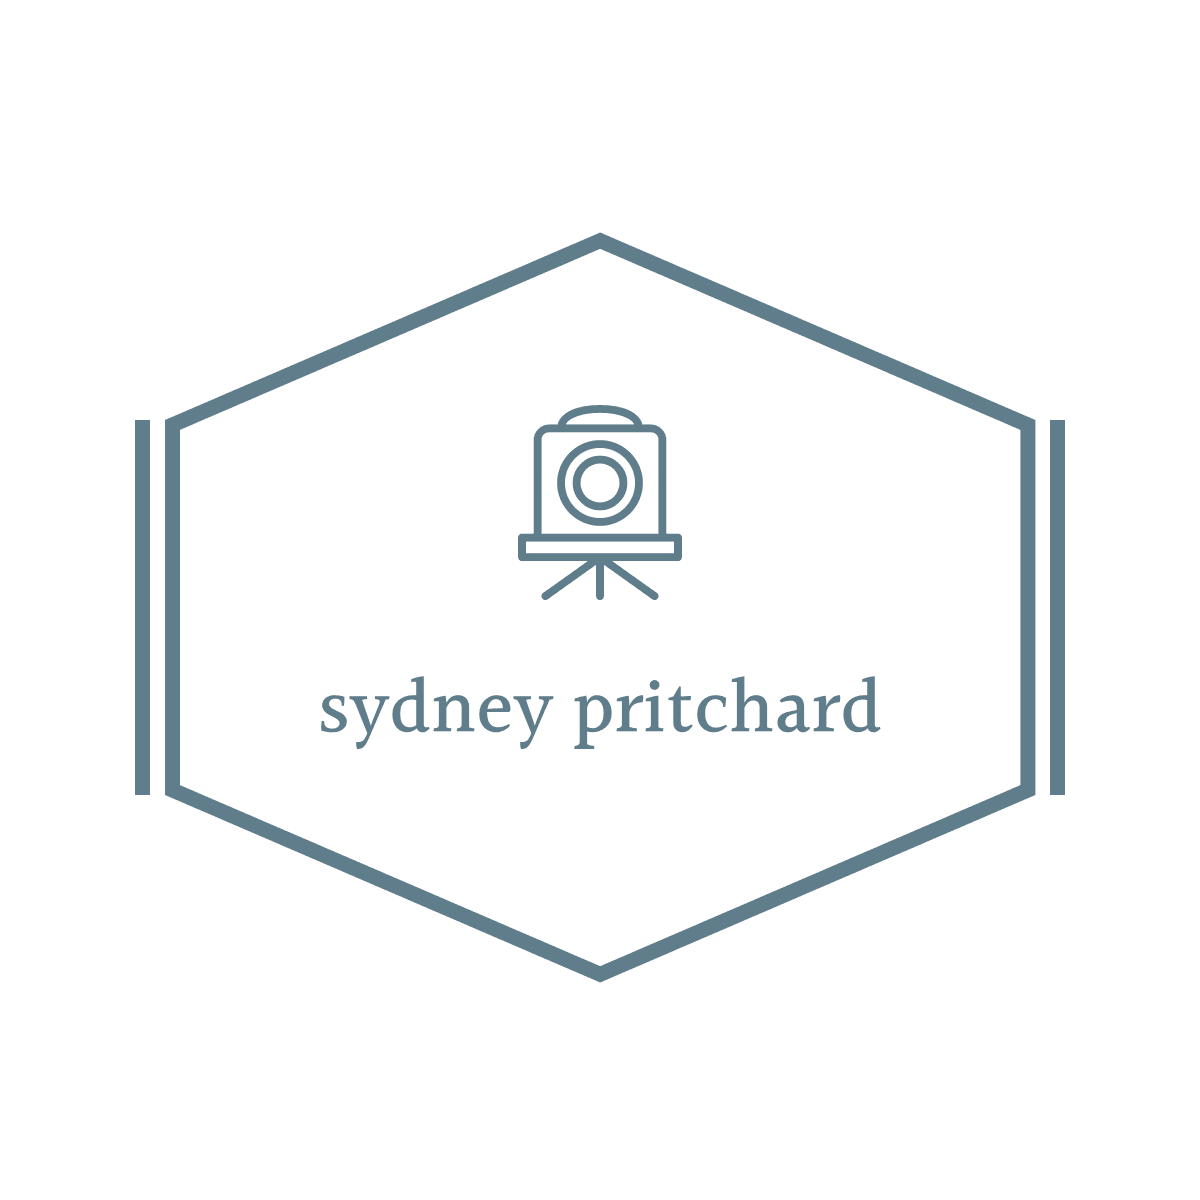 Sydney Pritchard